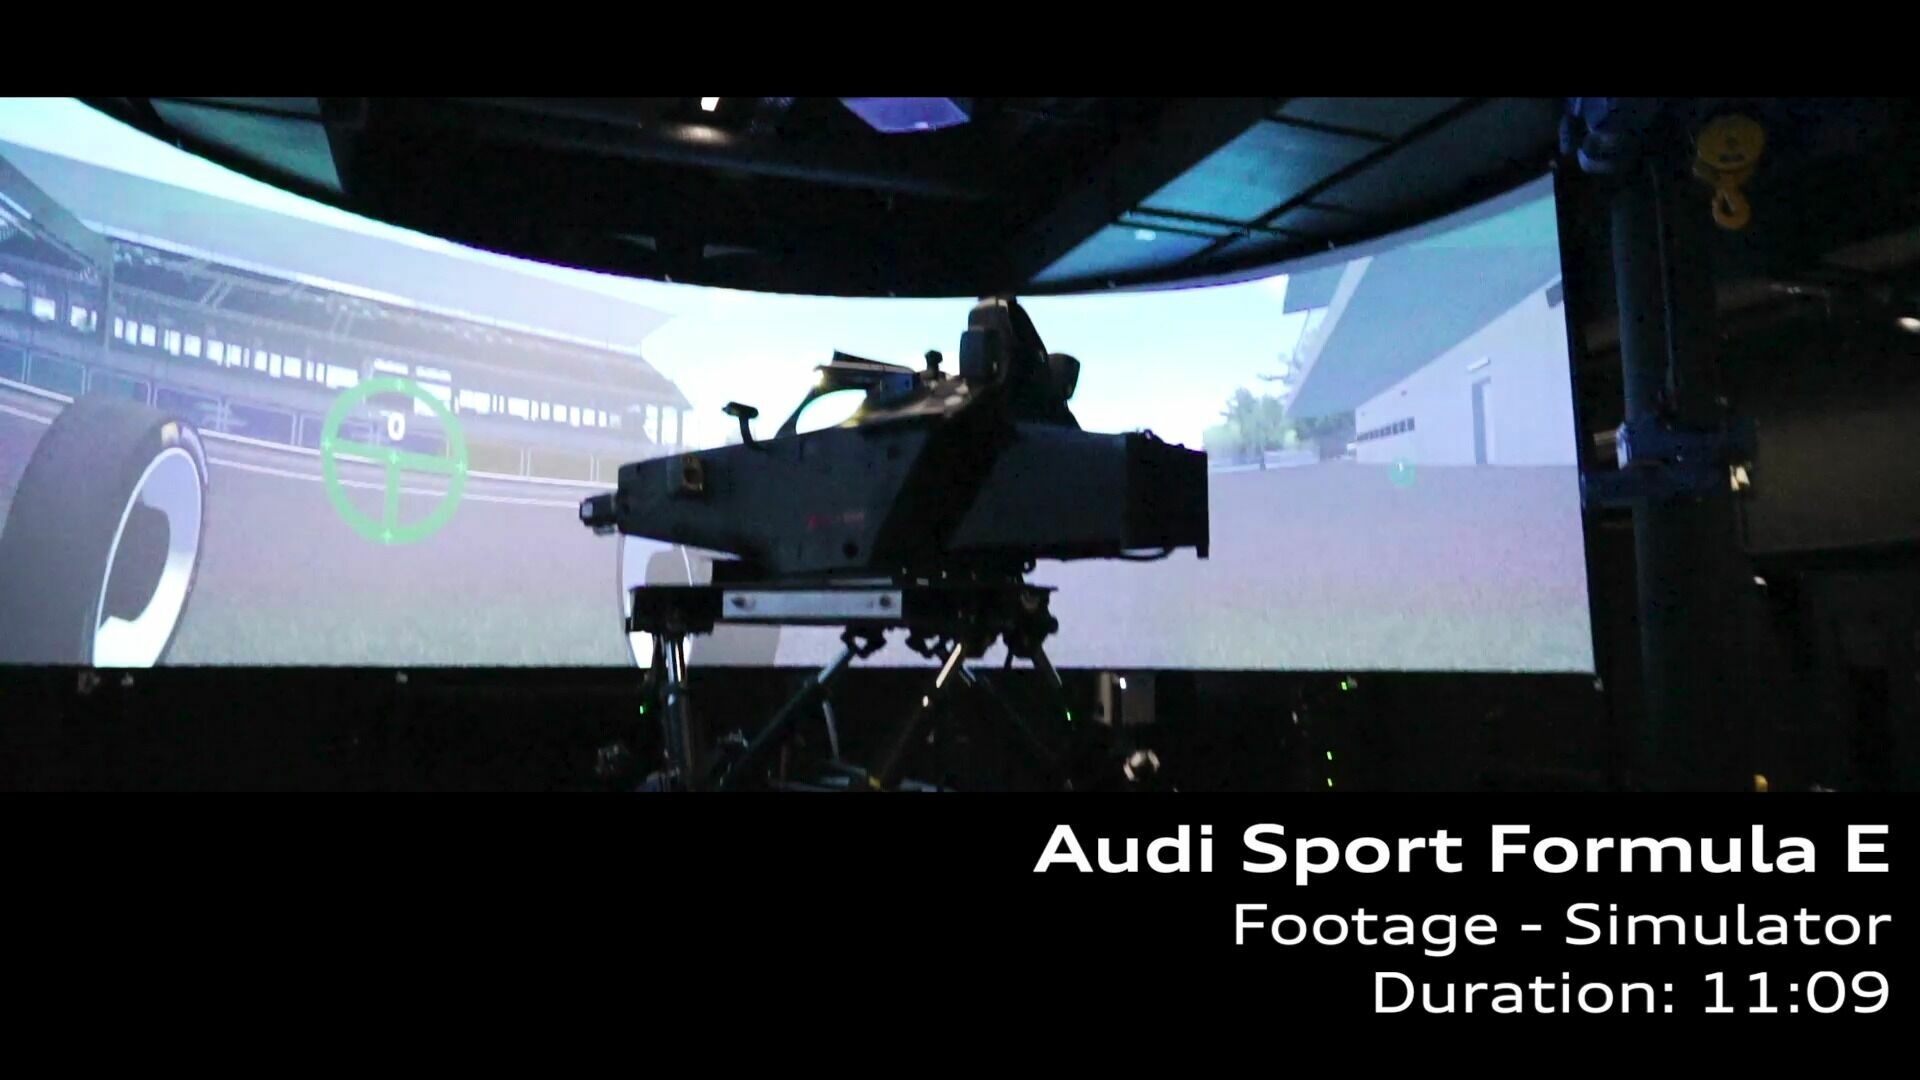 Footage: Audi Sport Formula E Simulator Neuburg